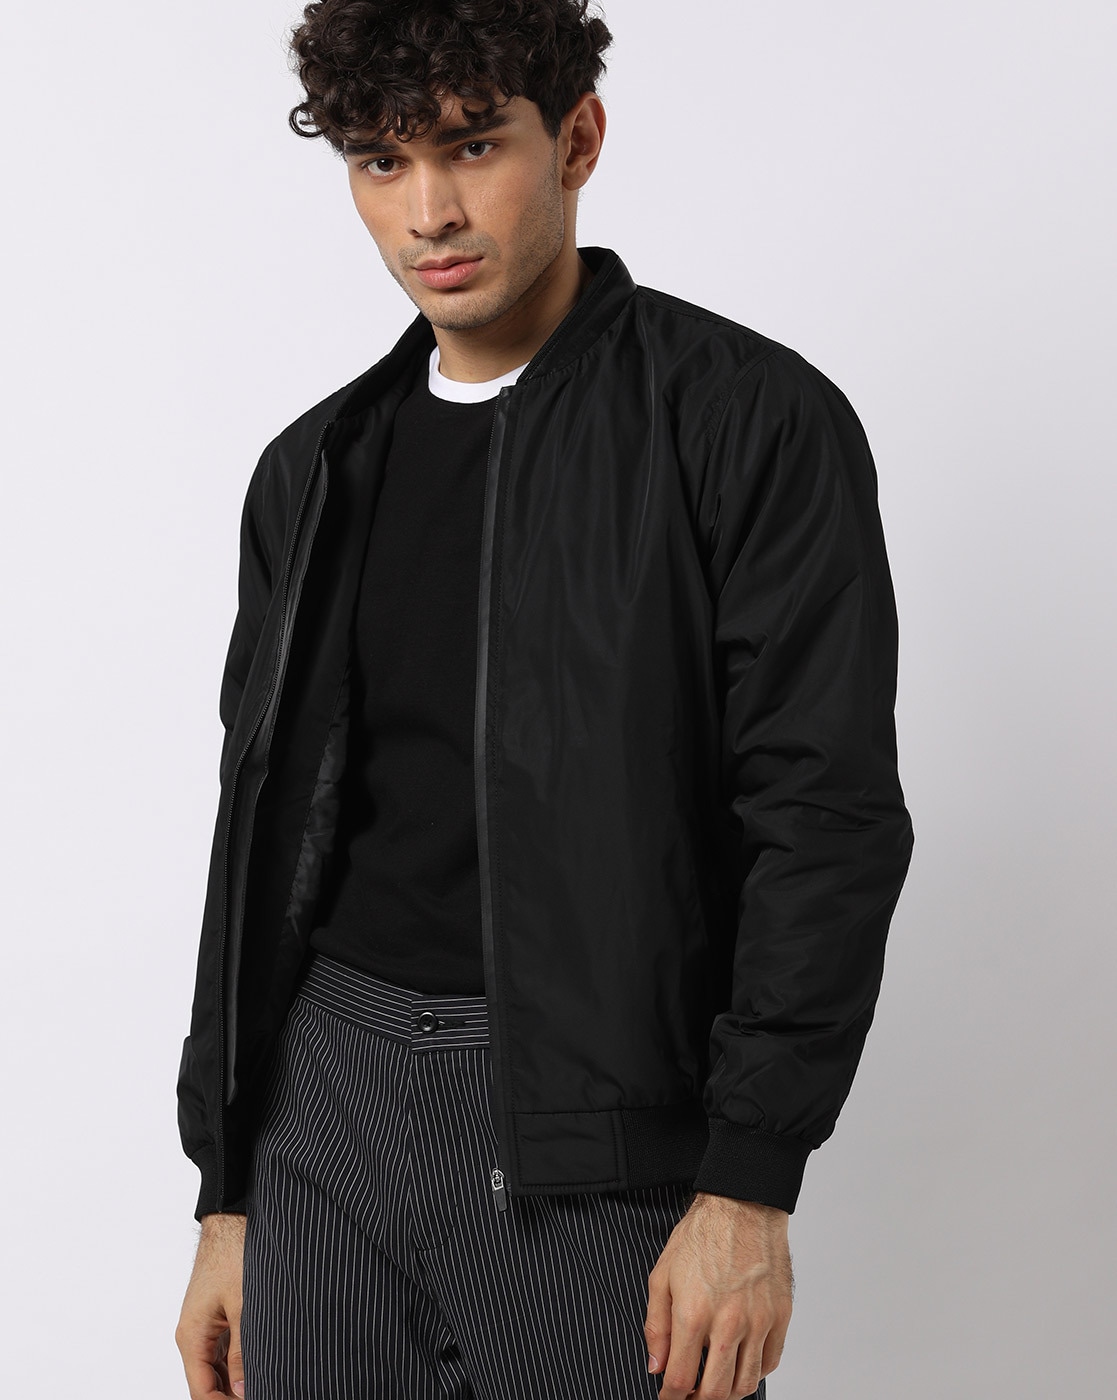 Buy Black Jackets & Coats for Men by R&B Online | Ajio.com